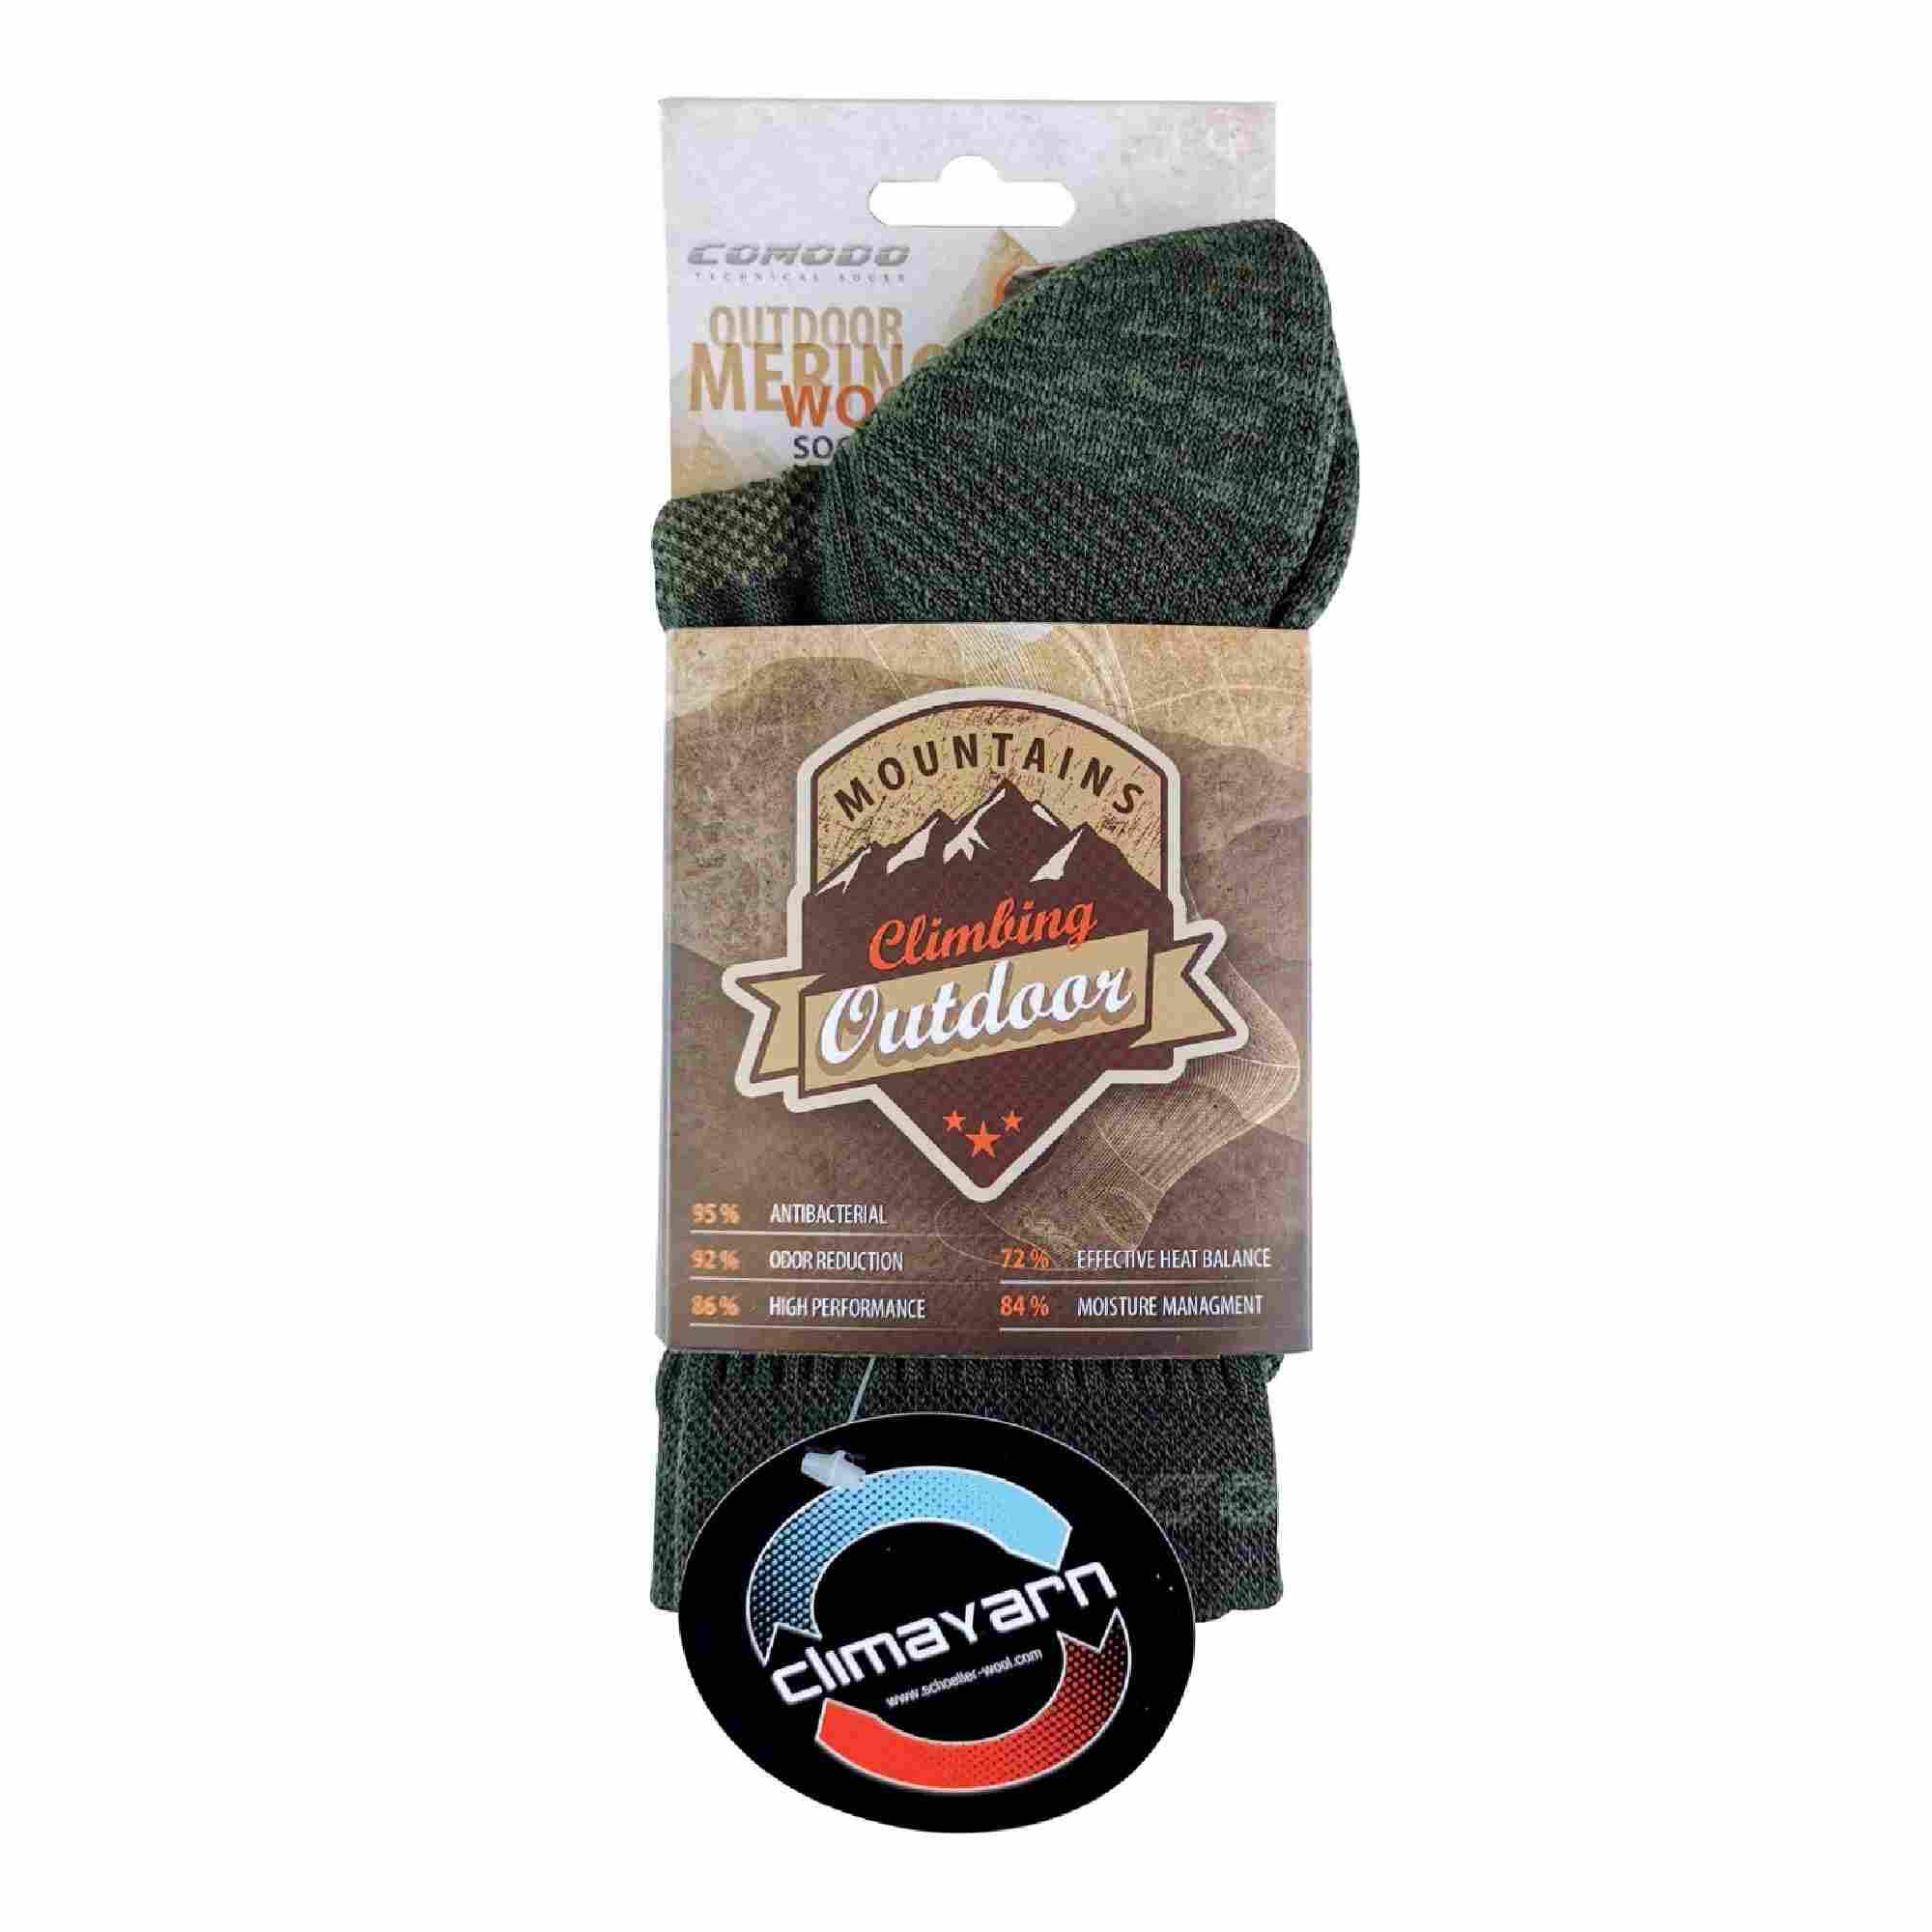 Outdoor Performance Merino Wool Quick Drying Lightweight Socks 2/3